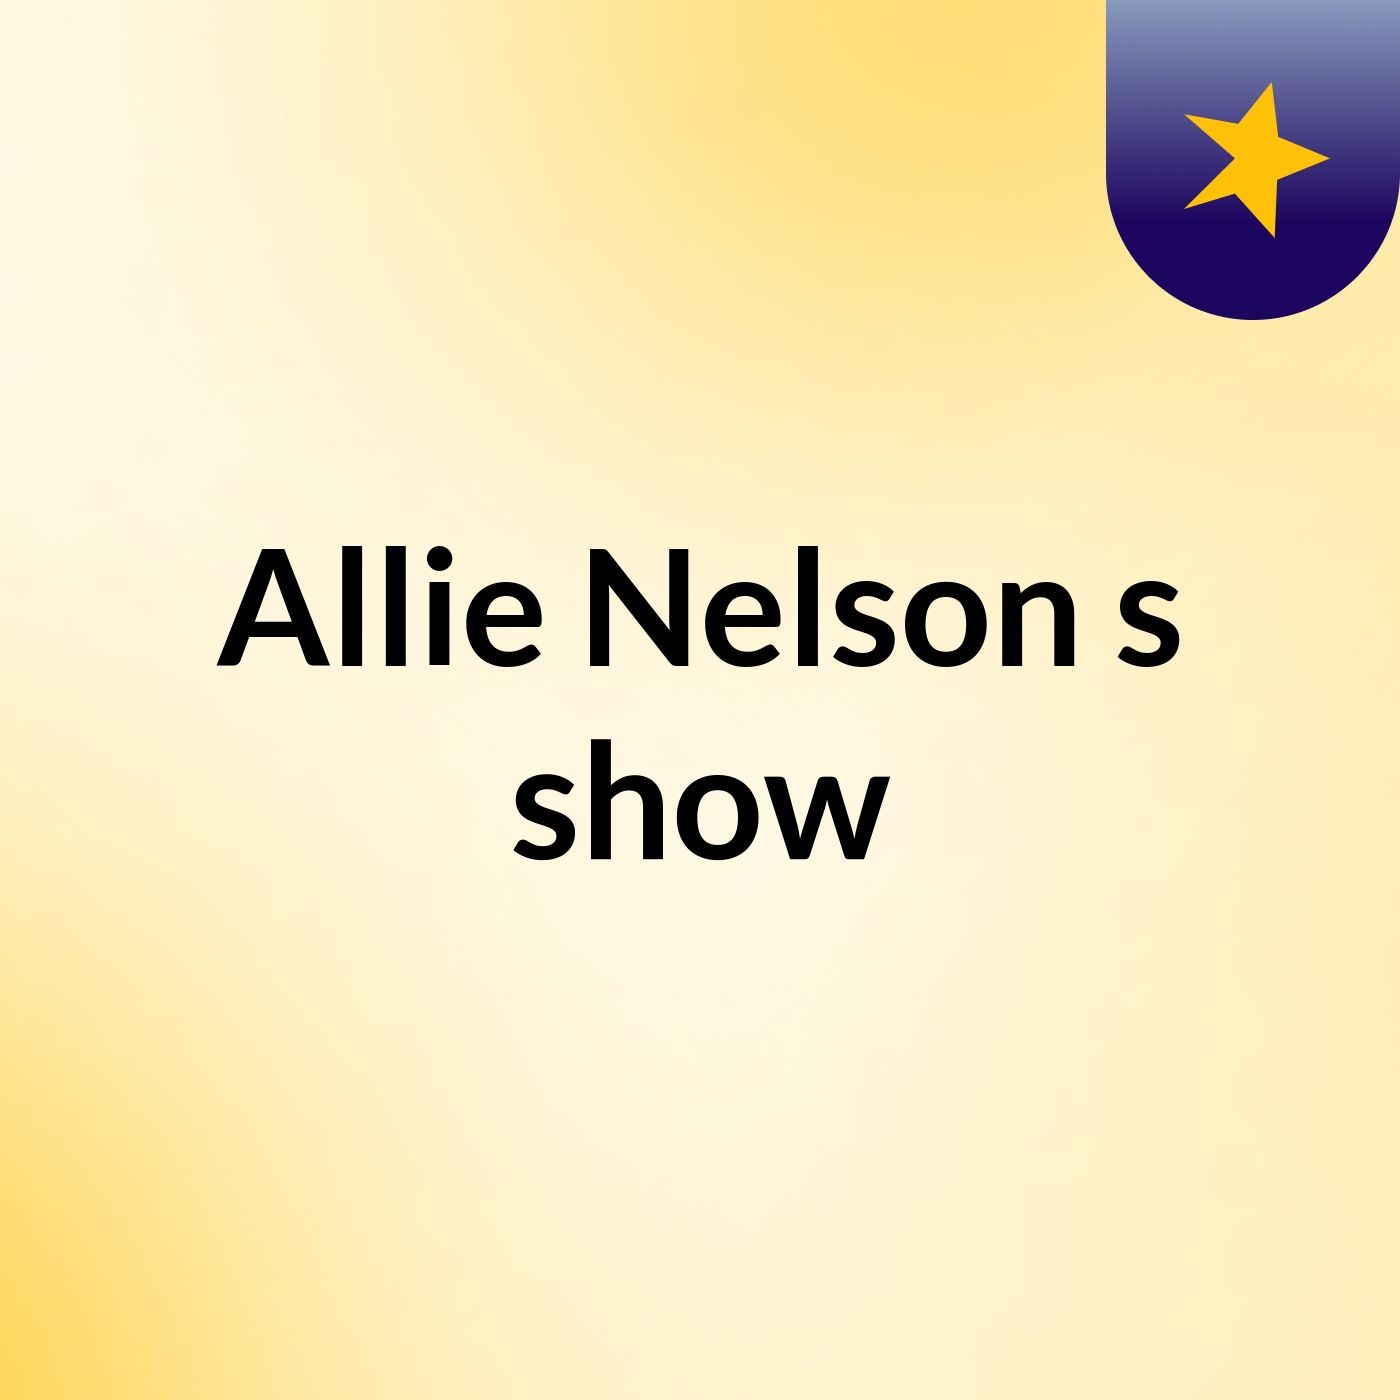 Allie Nelson's show